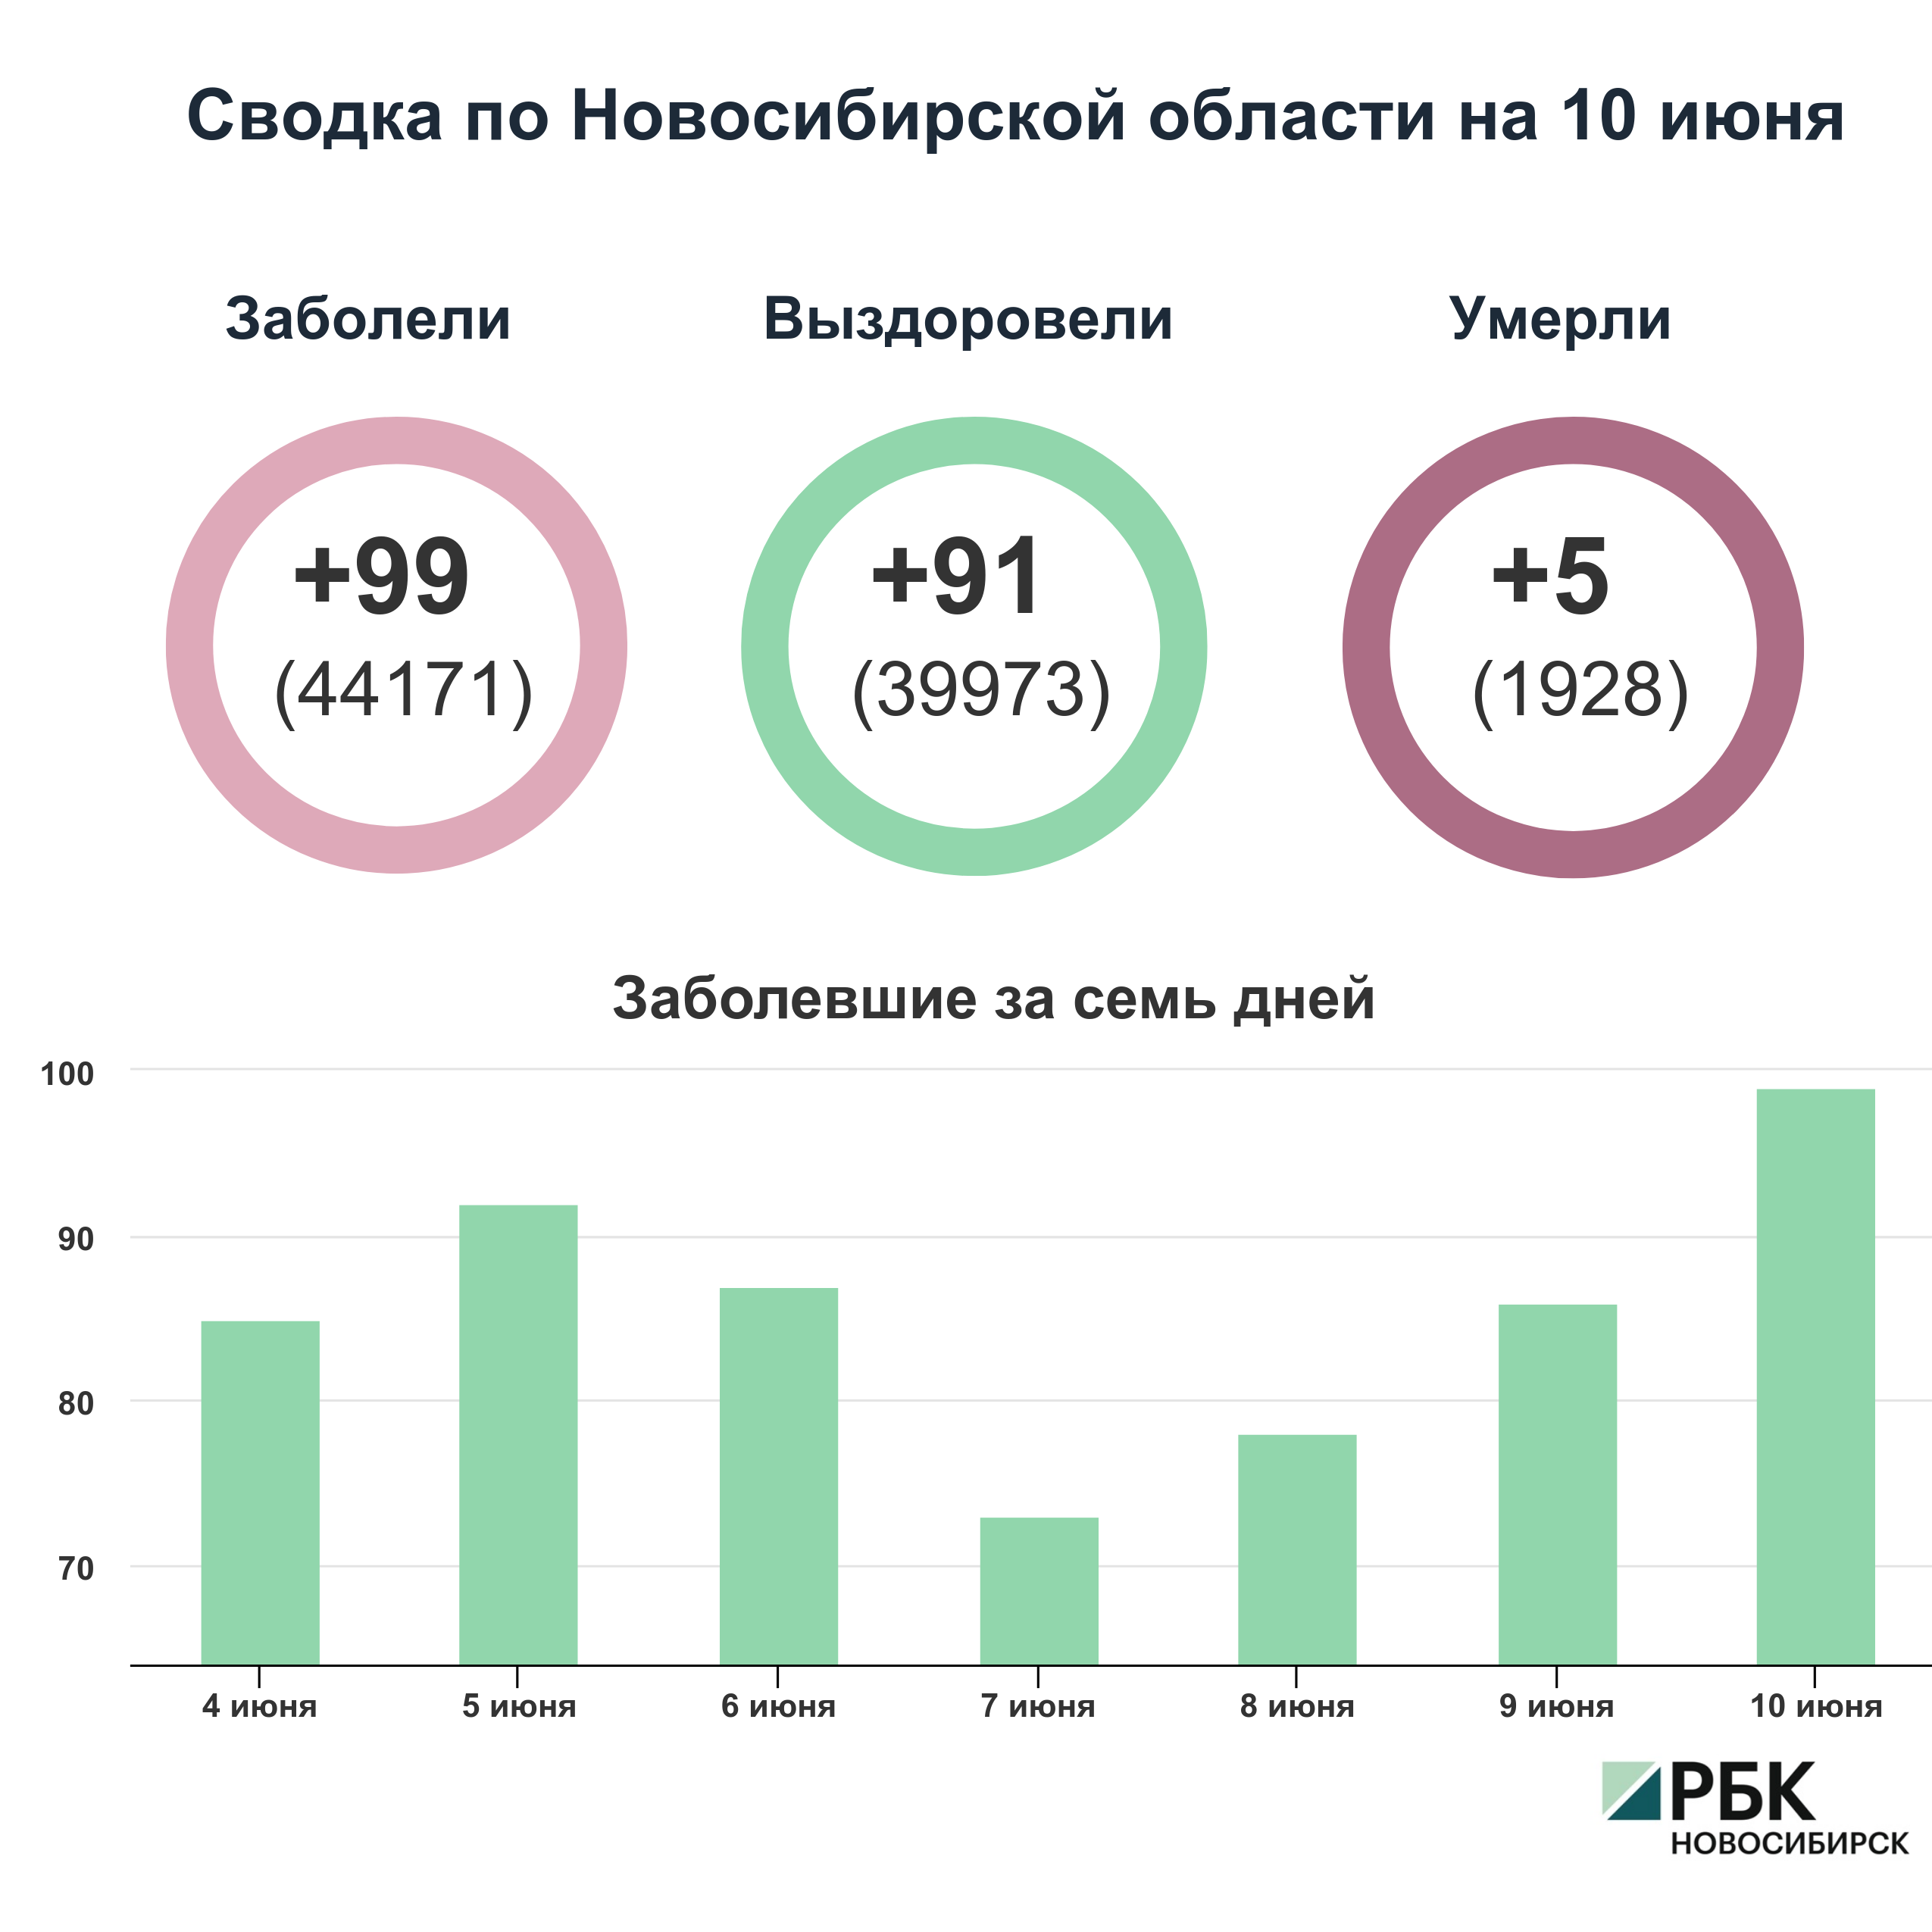 Коронавирус в Новосибирске: сводка на 10 июня